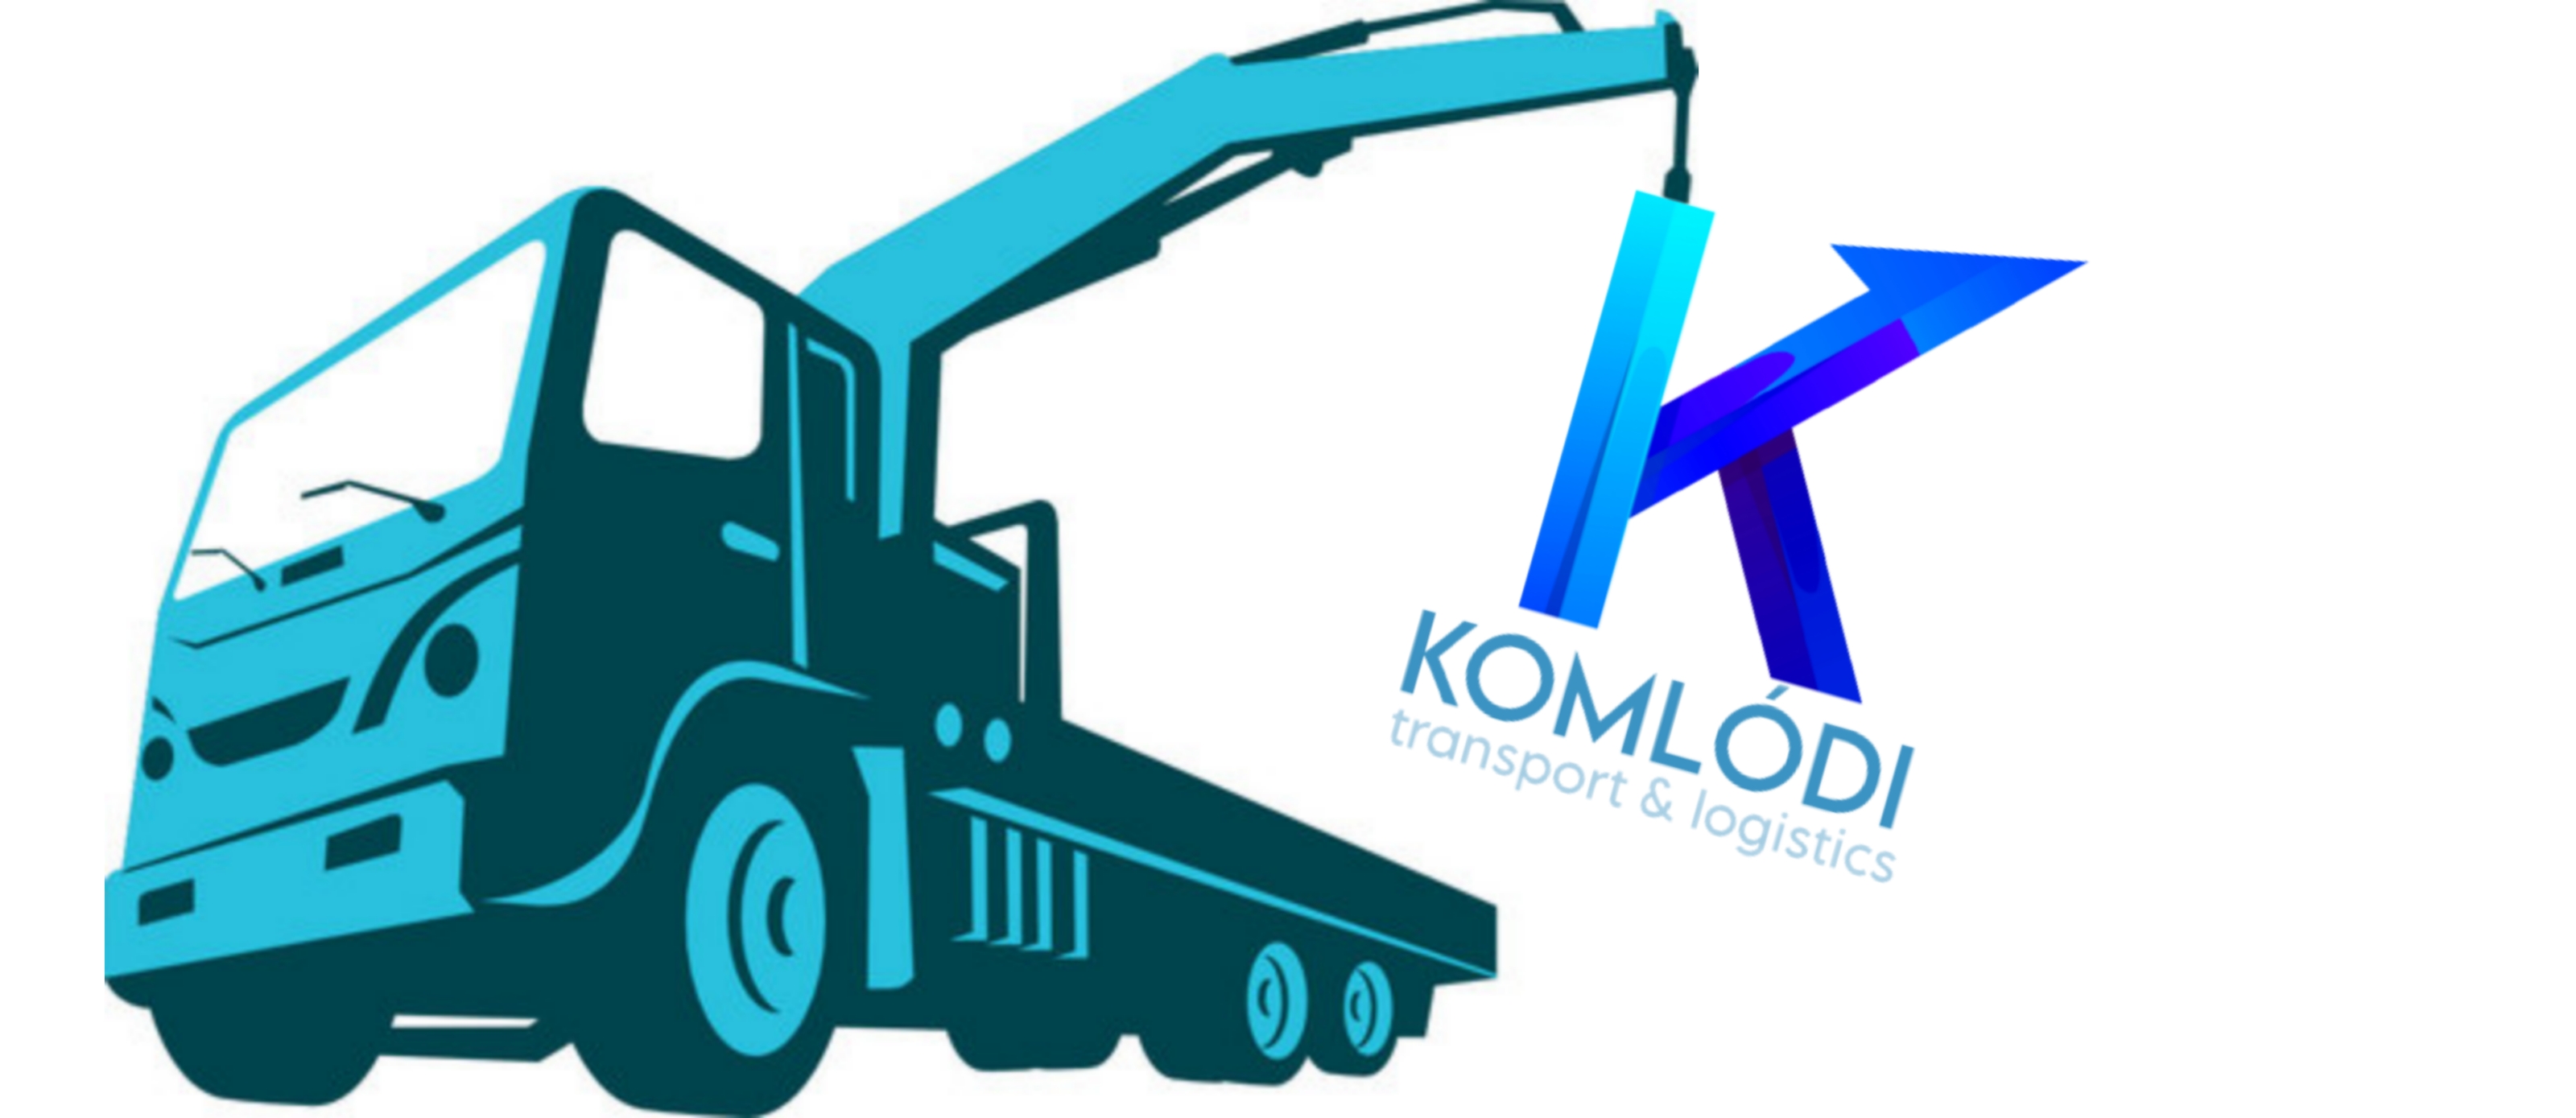 komlodi_trans_kft_logo.jpg